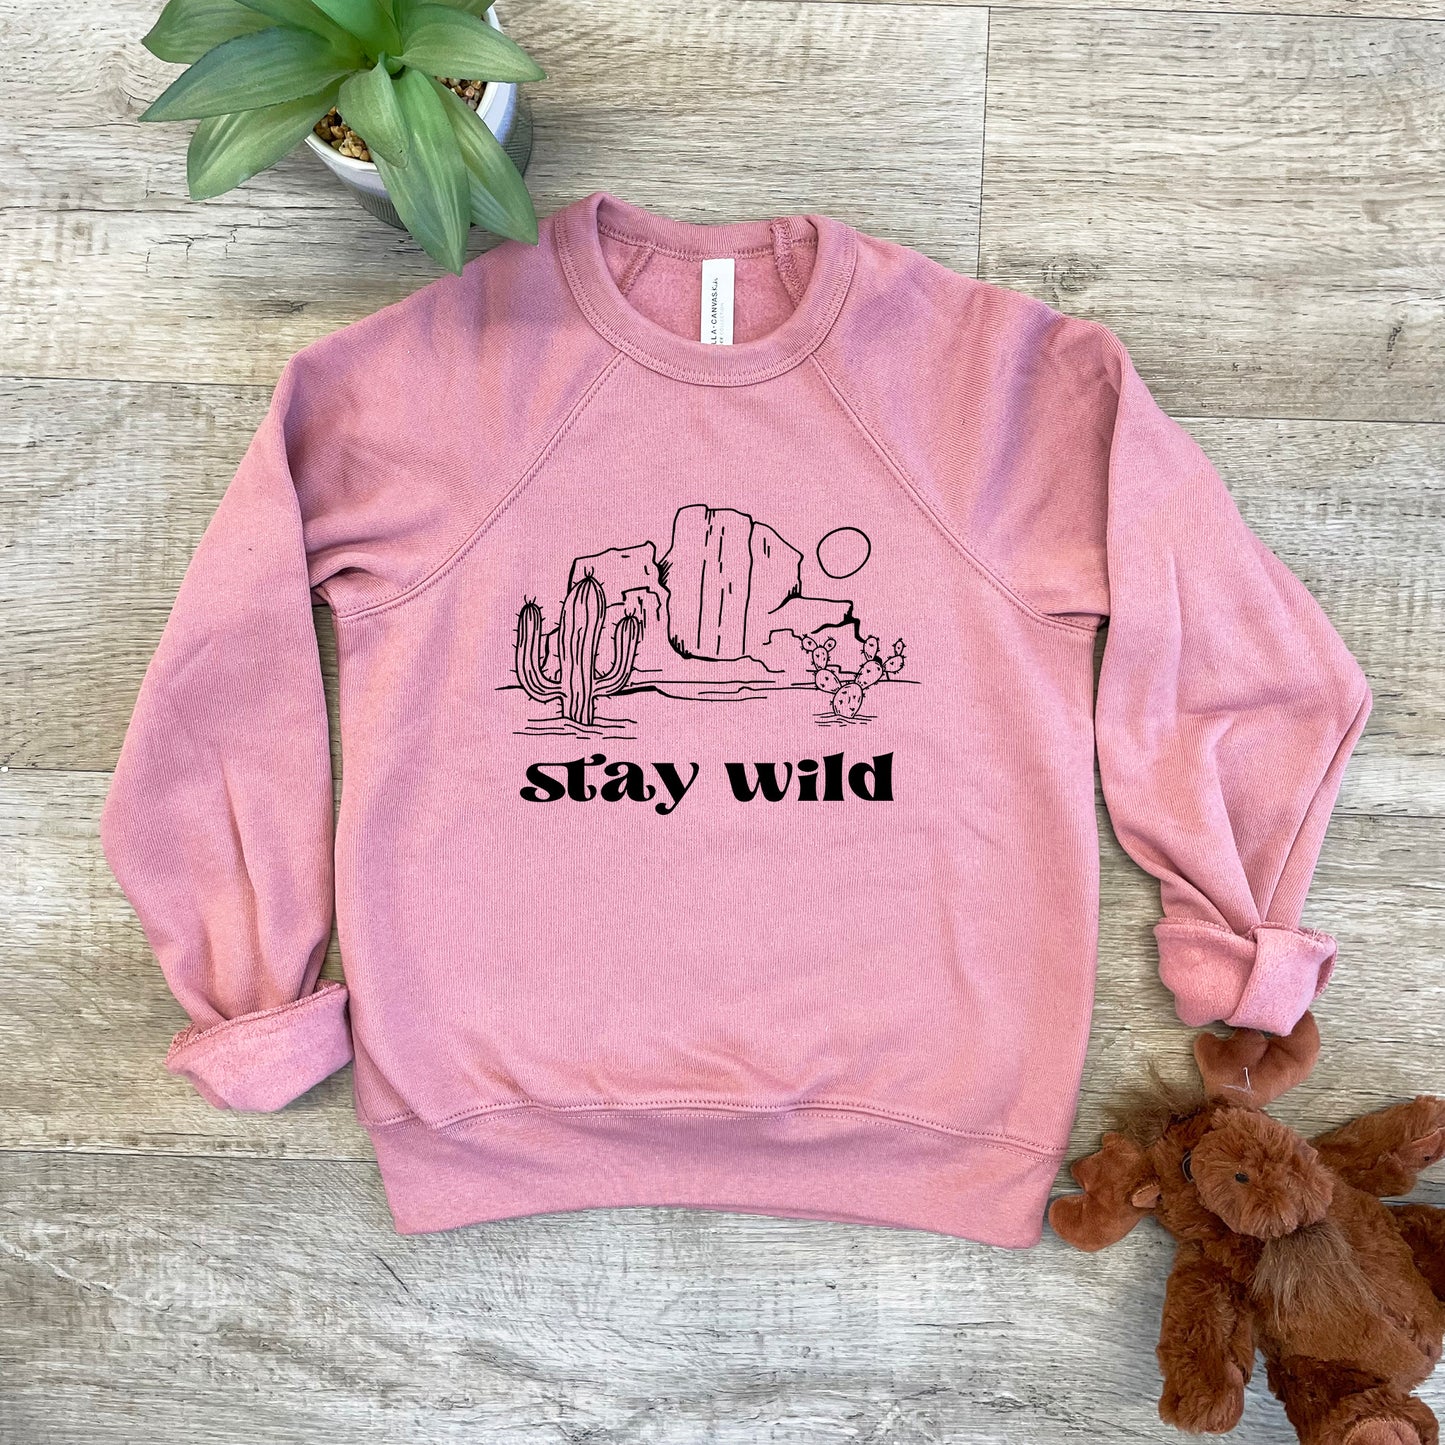 Stay Wild - Kid's Sweatshirt - Athletic Heather or Mauve